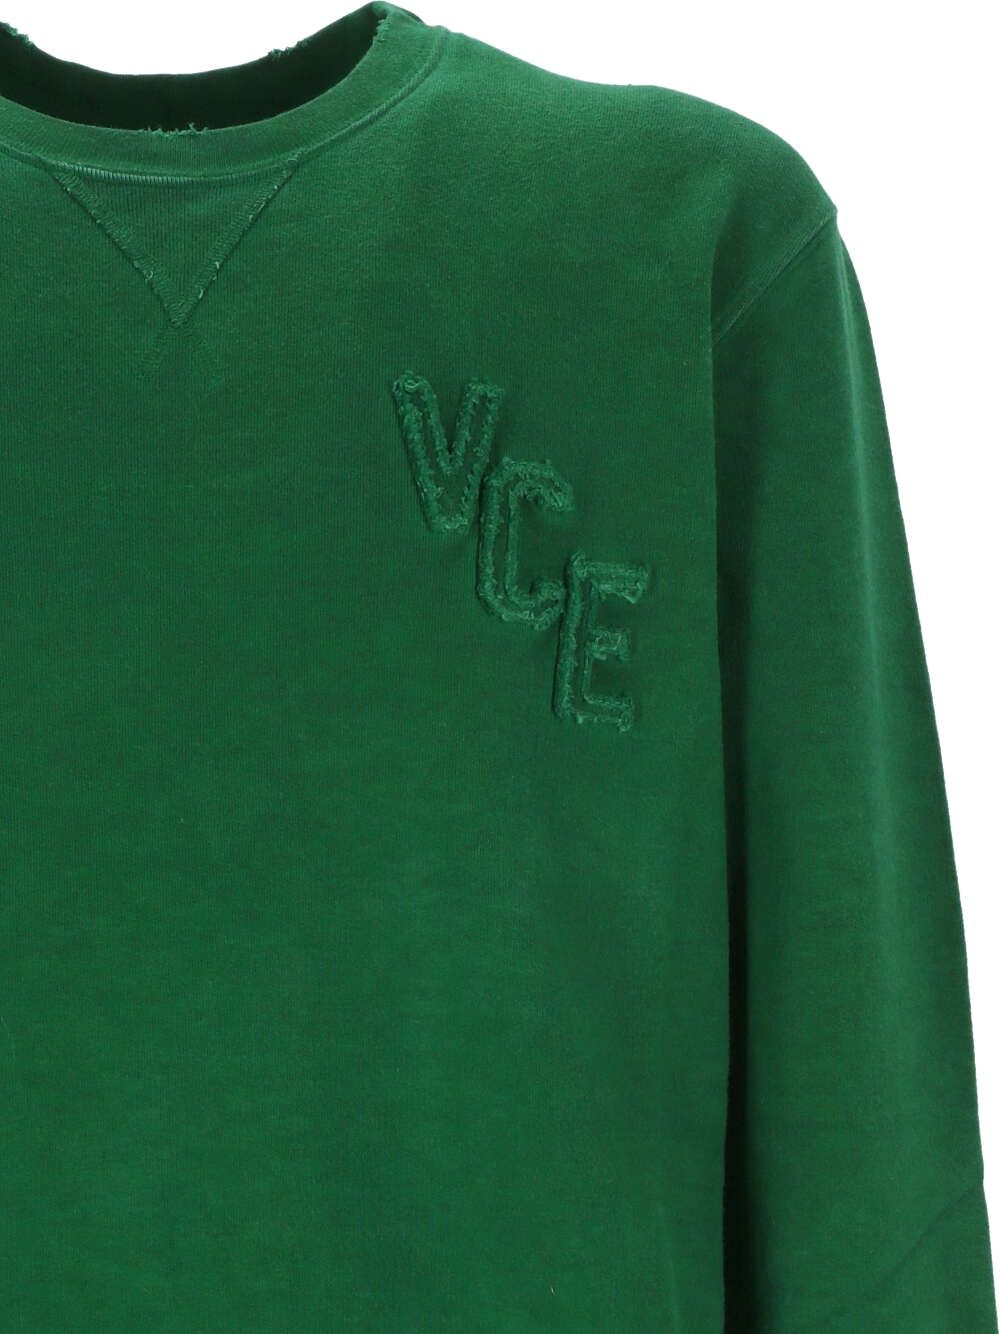 Green textured cotton jersey sweatshirt